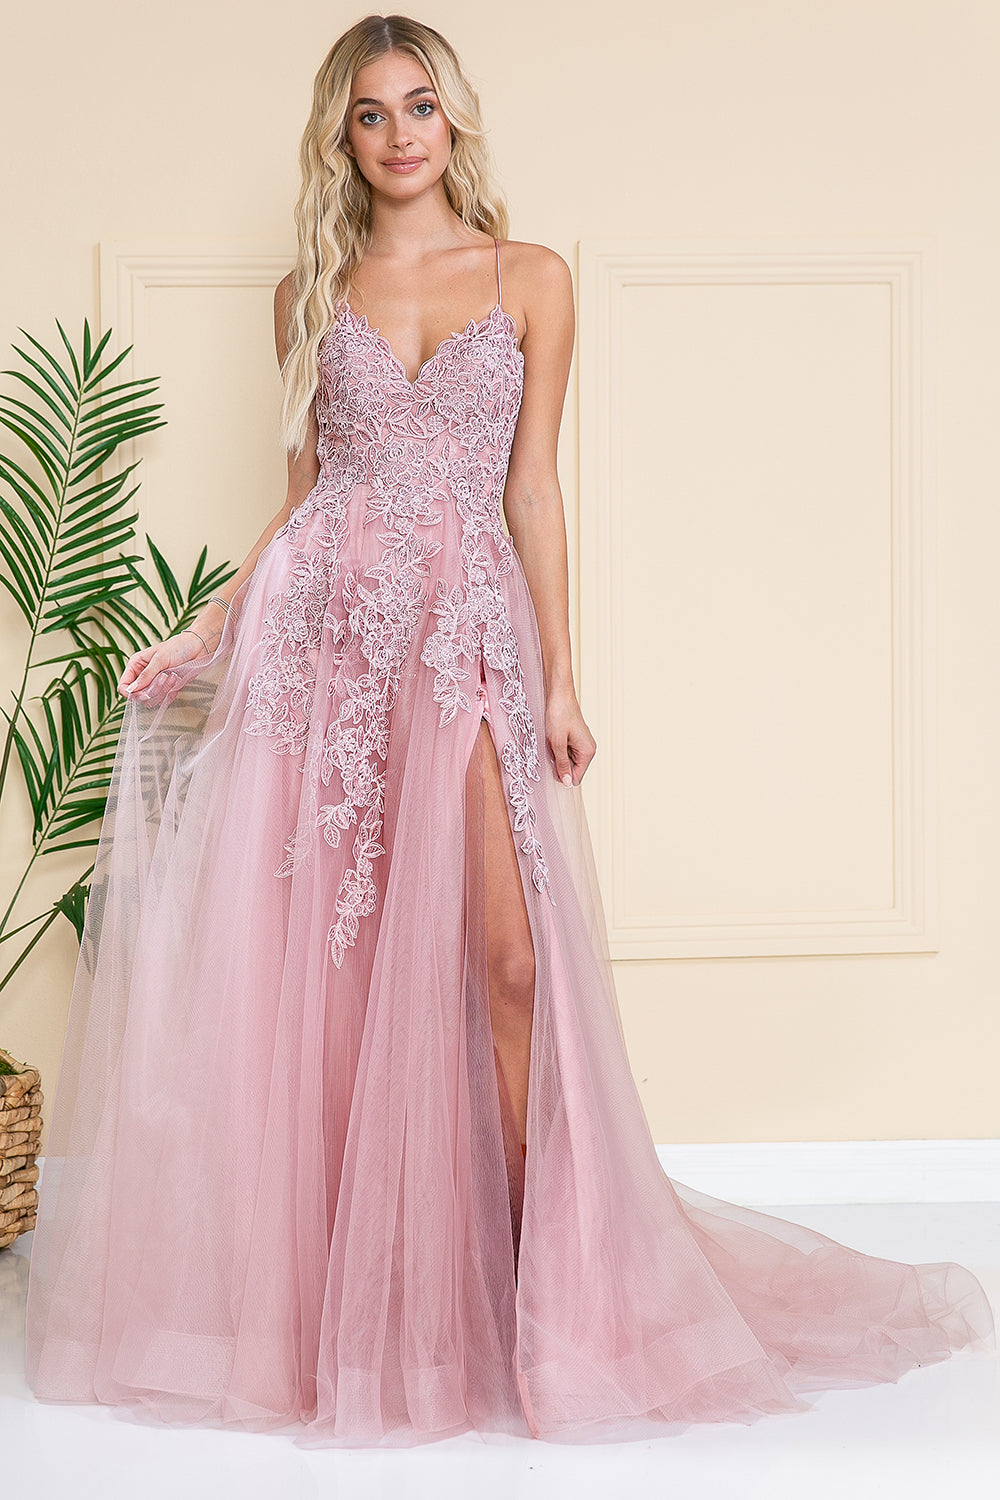 V-Neck Embroidered Lace Tulle Skirt Slit Long Wedding & Prom Dress ACBZ014-Prom Dress-smcfashion.com